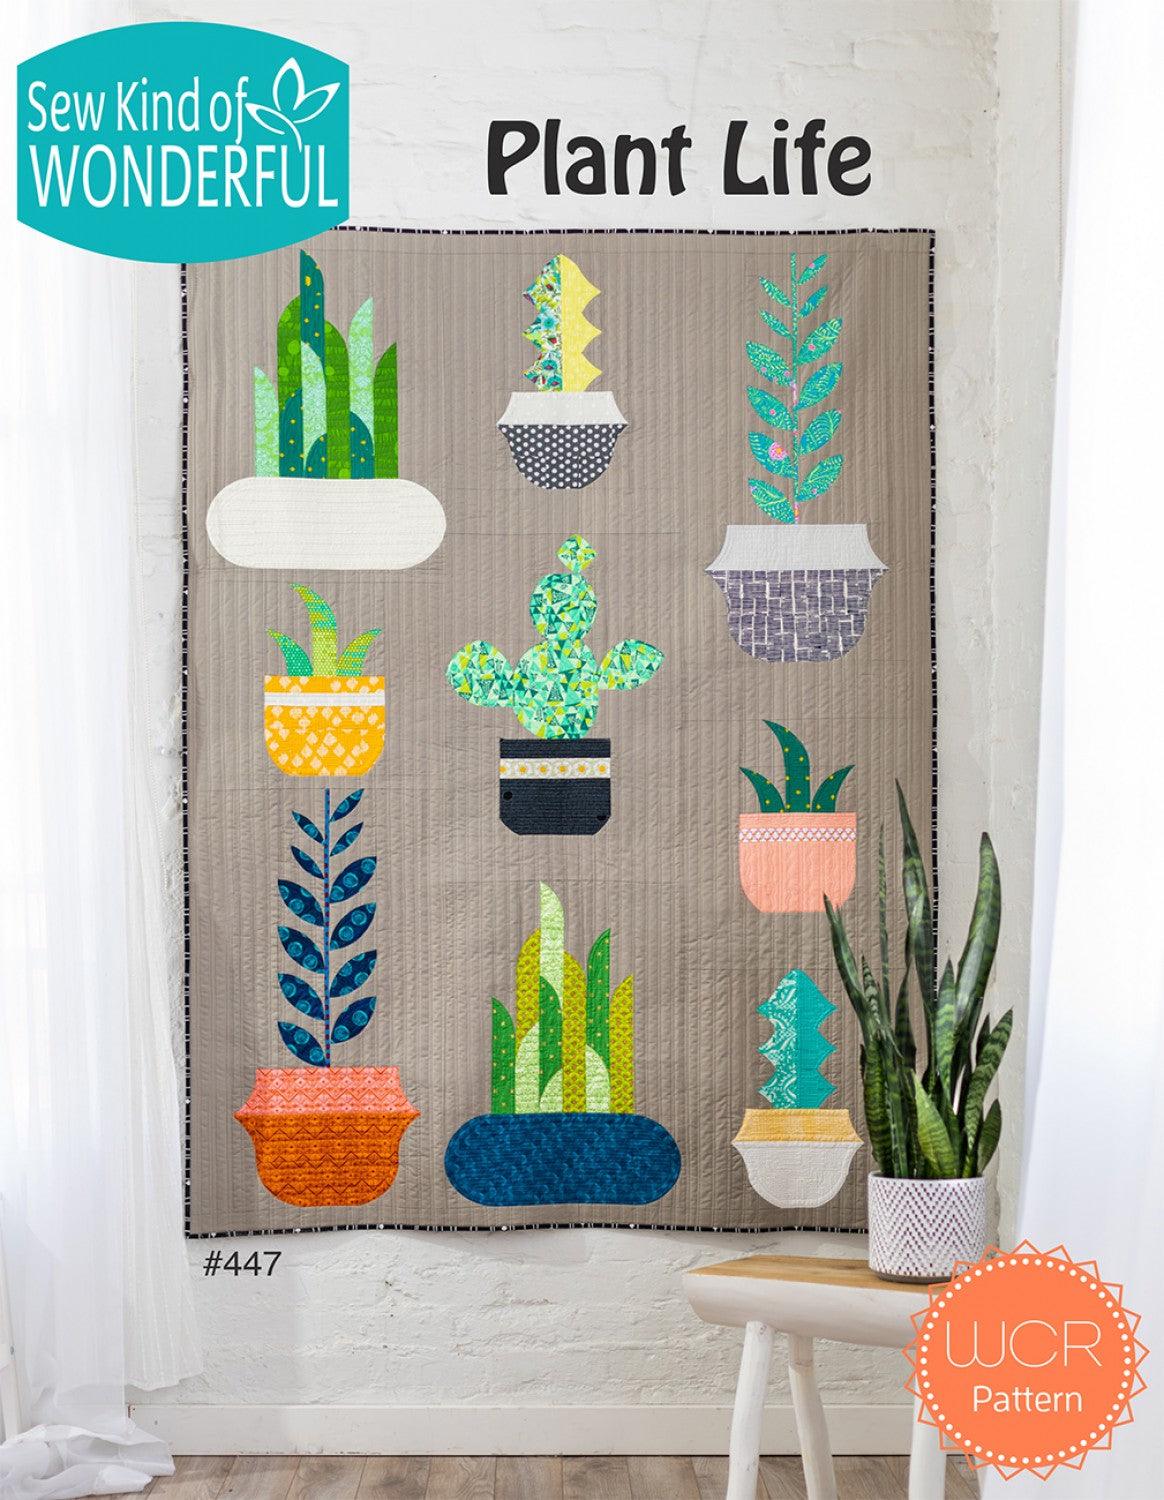 Plant Life - Quilt Pattern - Sew Kind of Wonderful - Kawartha Quilting and Sewing LTD.